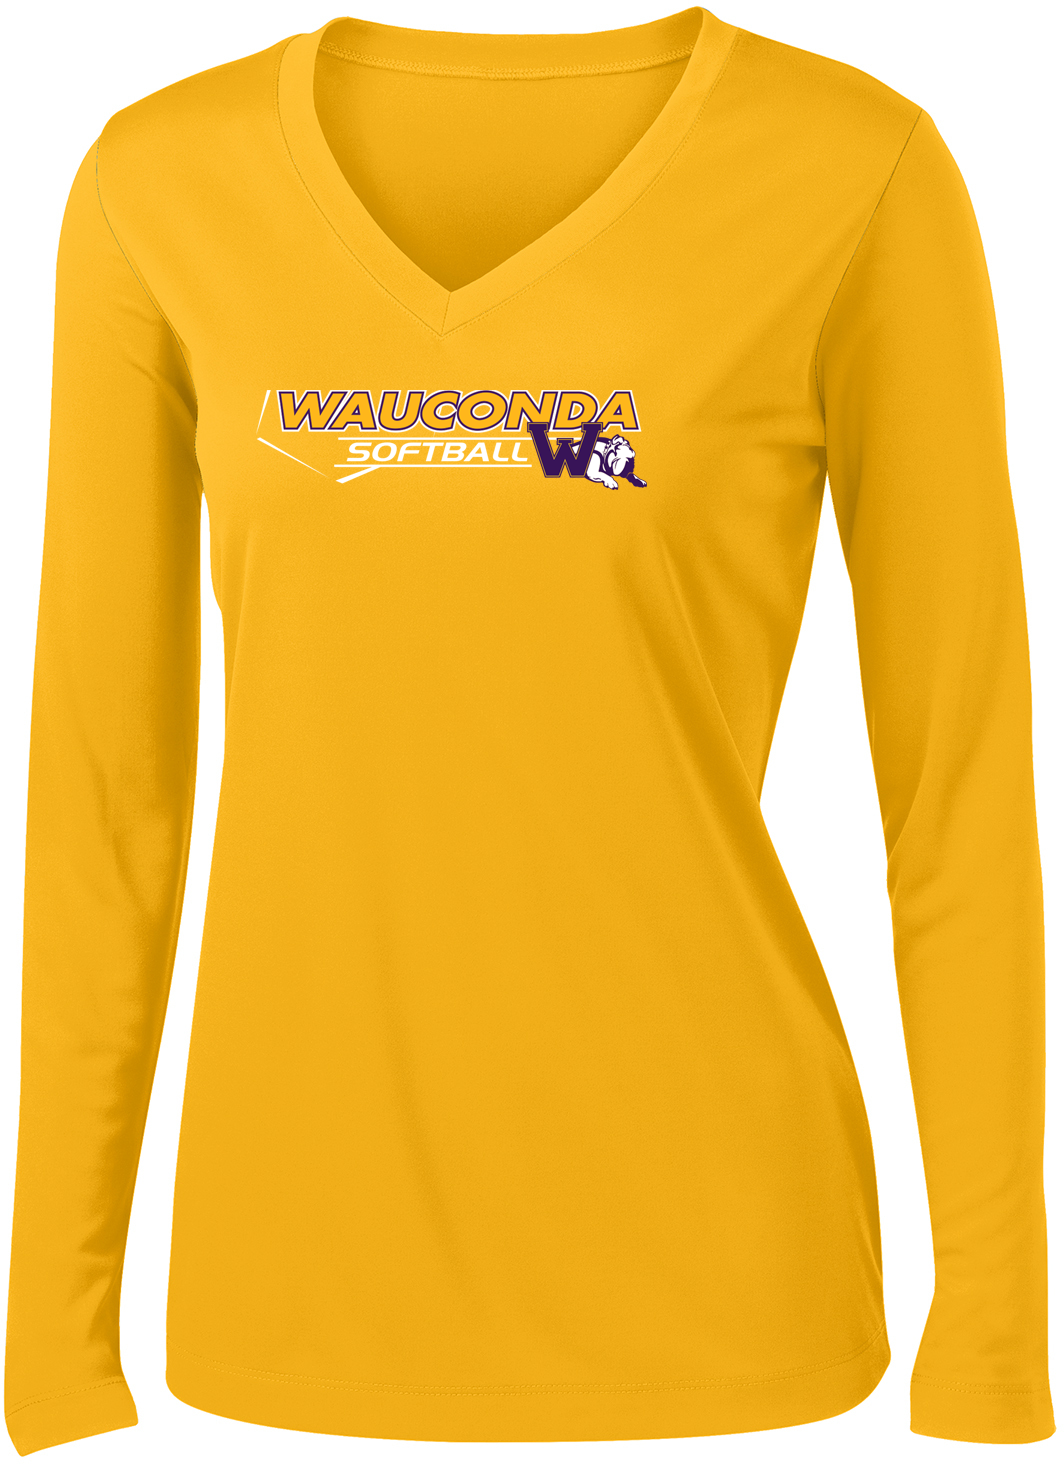 Wauconda Softball Women's Long Sleeve Performance Shirt